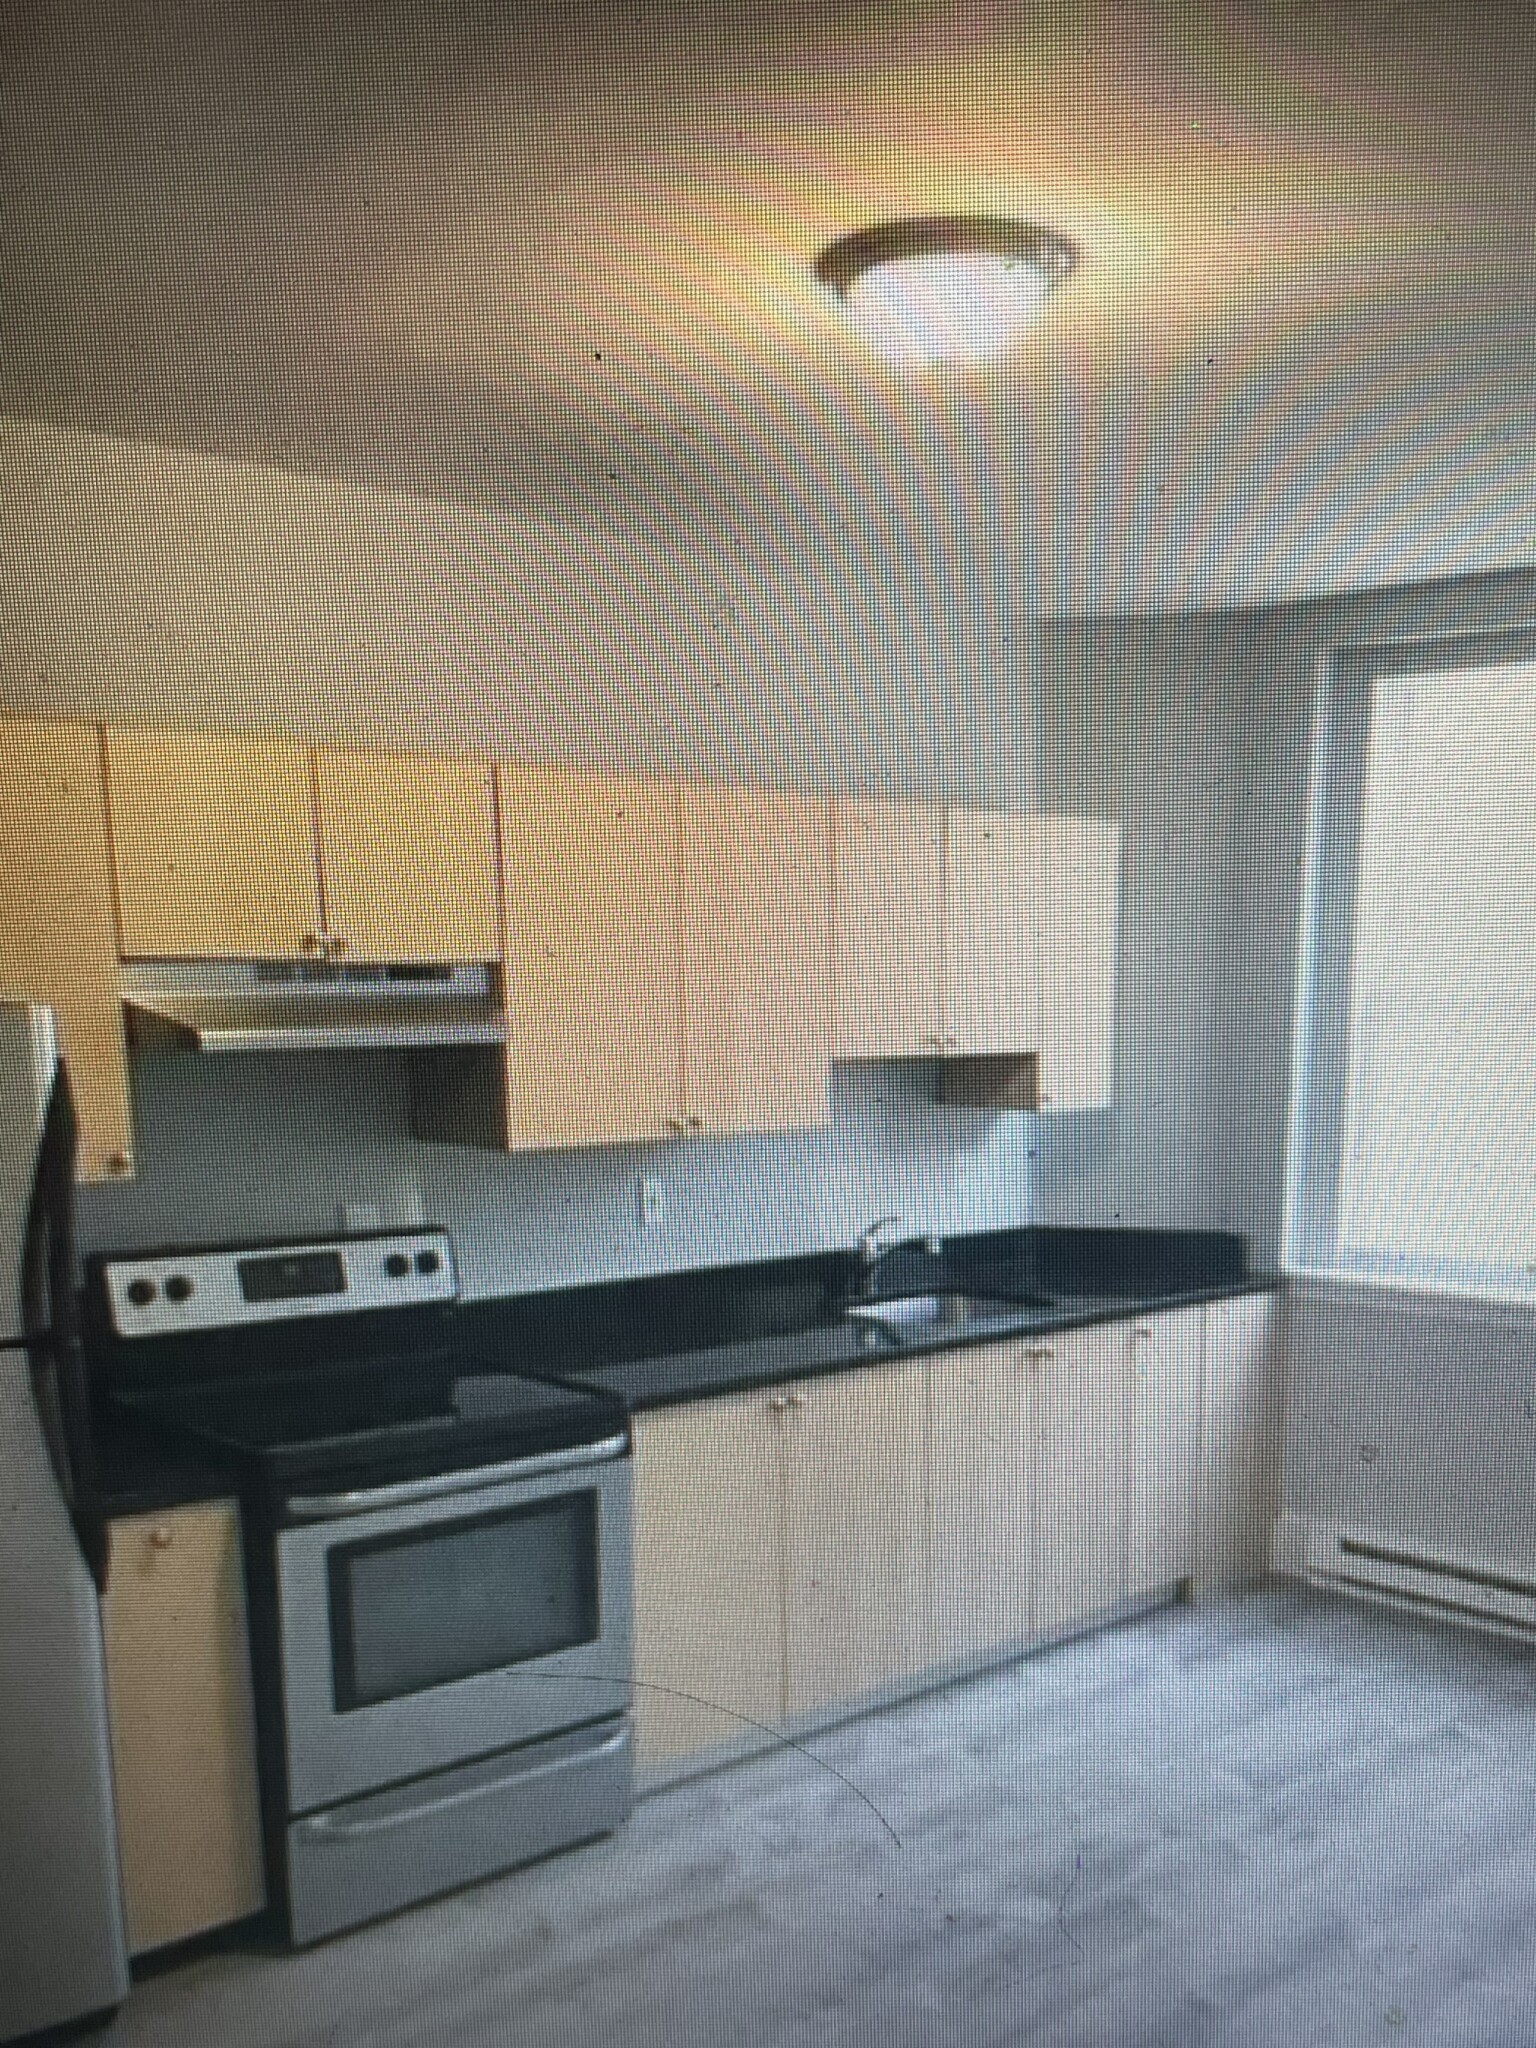 Photos of apartment on Lyndhurst St.,Boston MA 02124